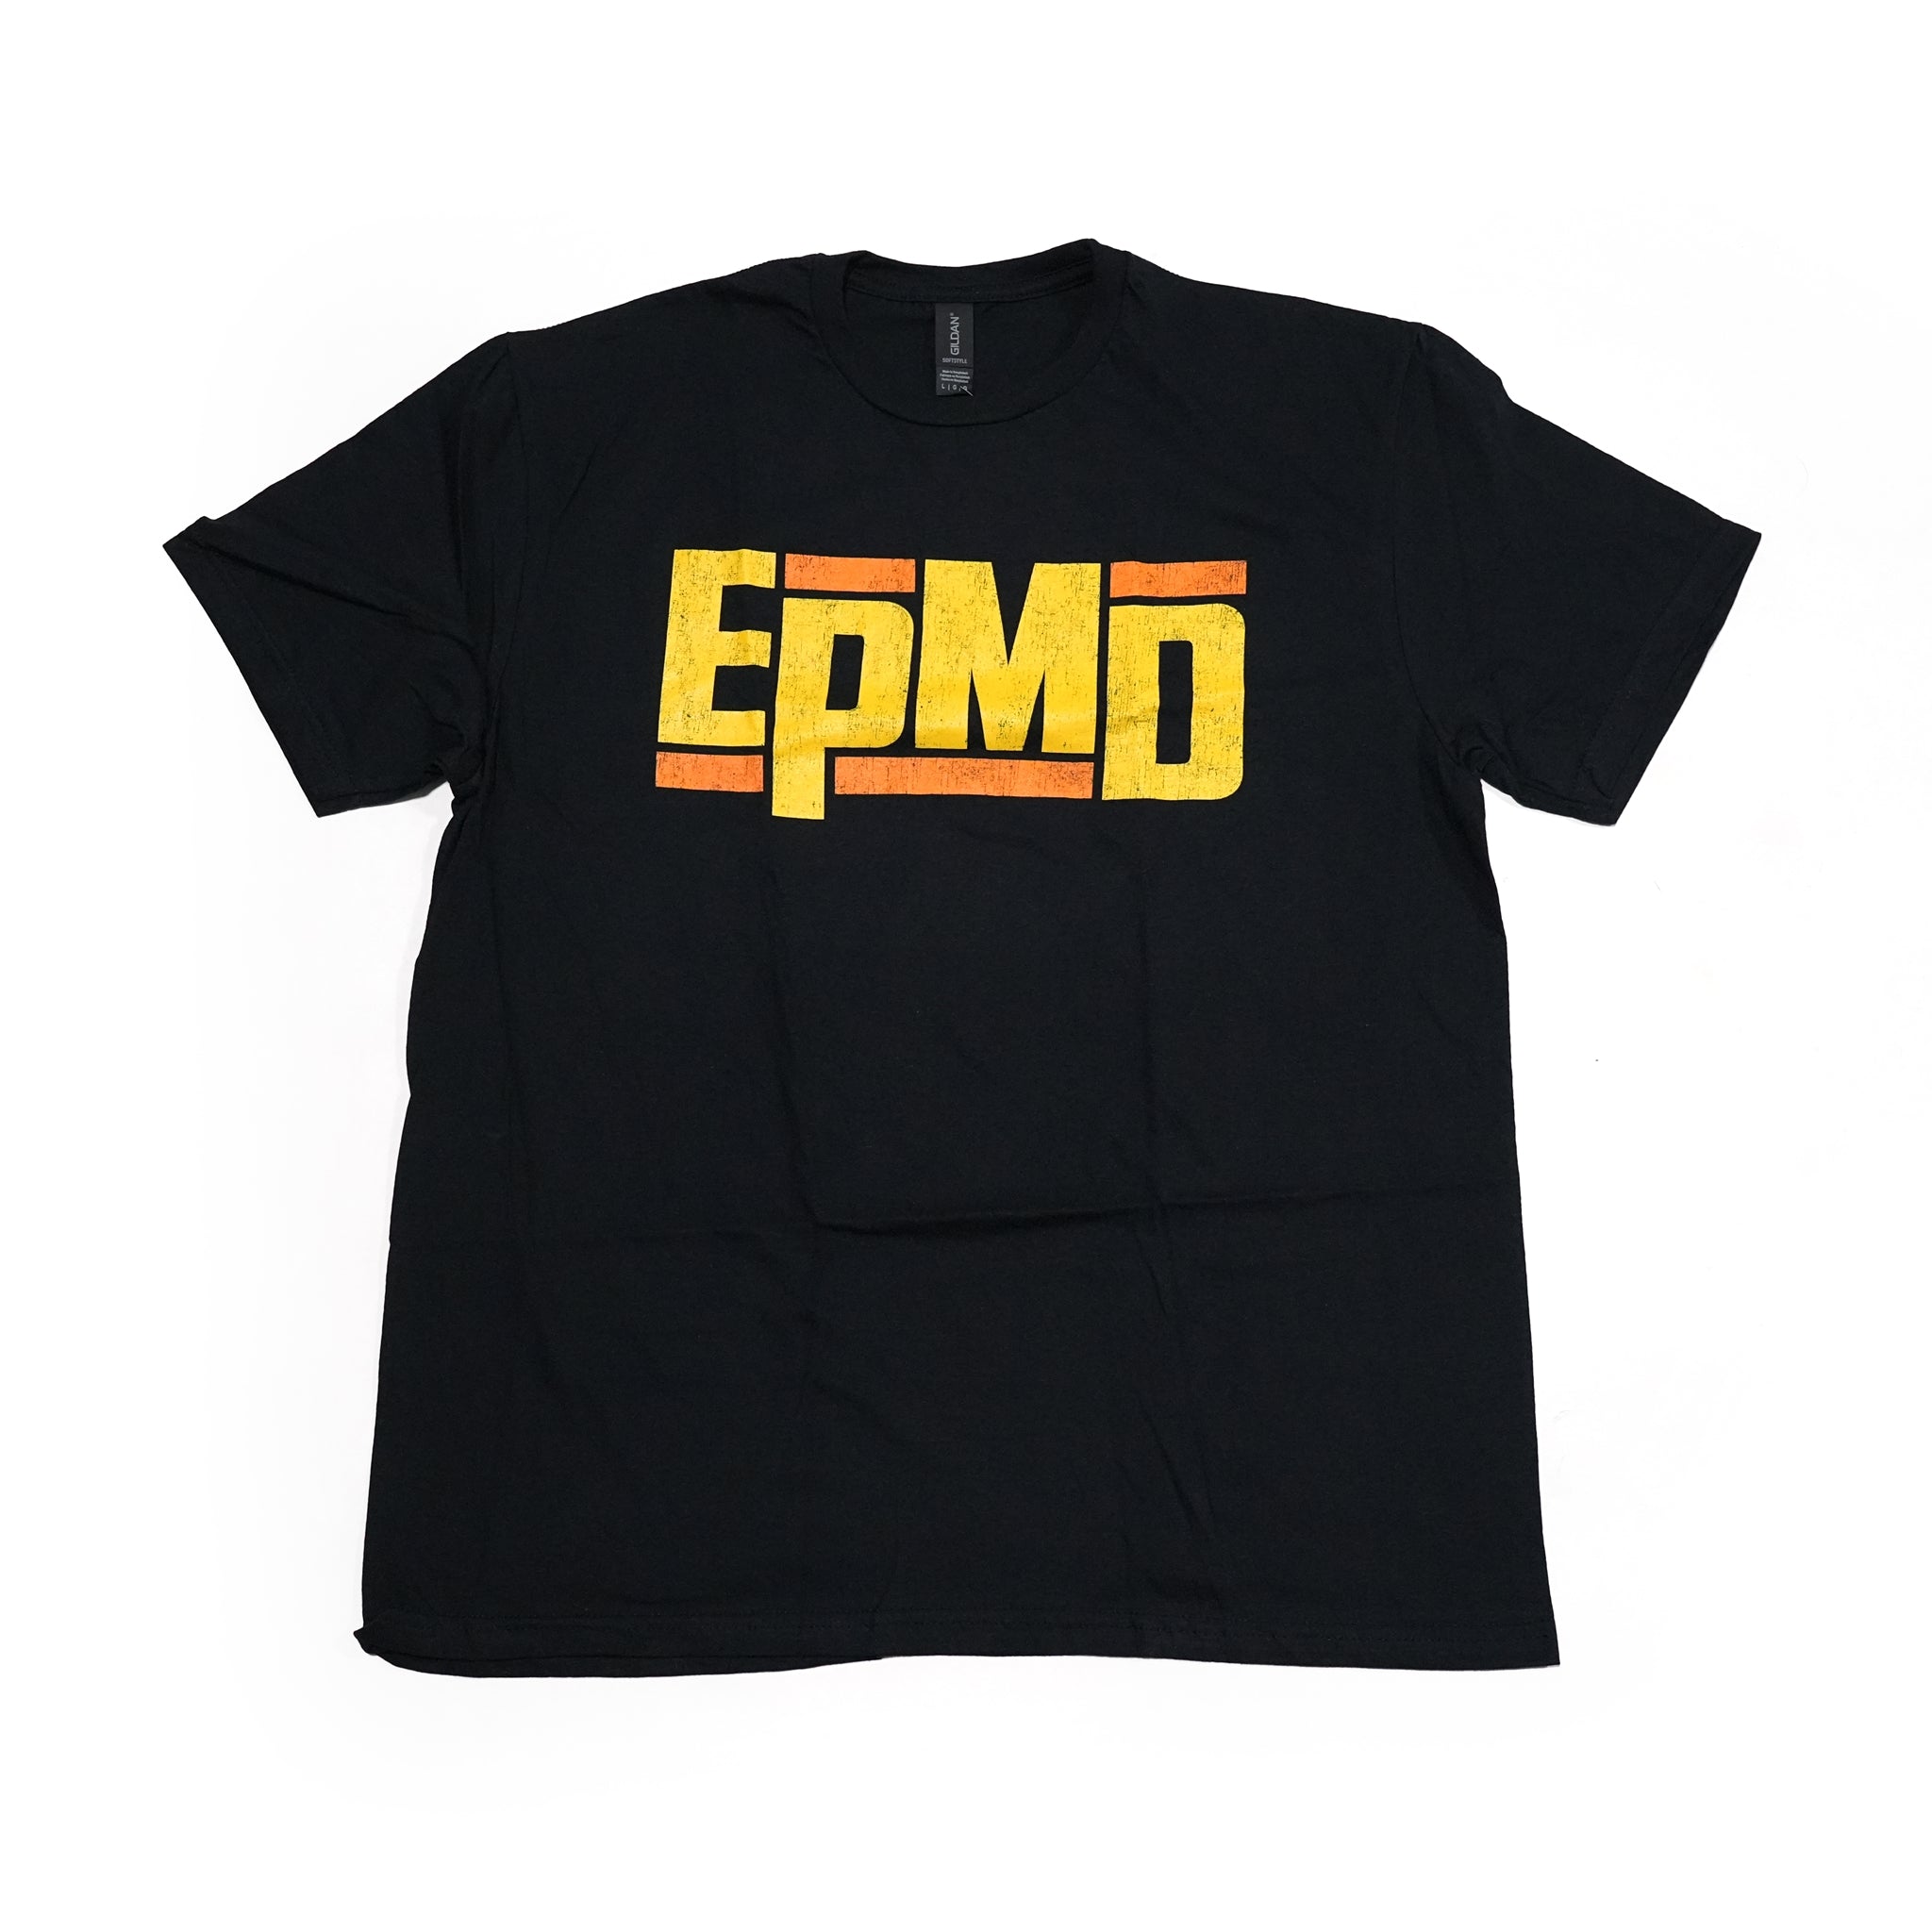 Name:EPMD_Distressed Classic Logo_Unisex_Black【ROCK OFF】【ネコポス選択可能】